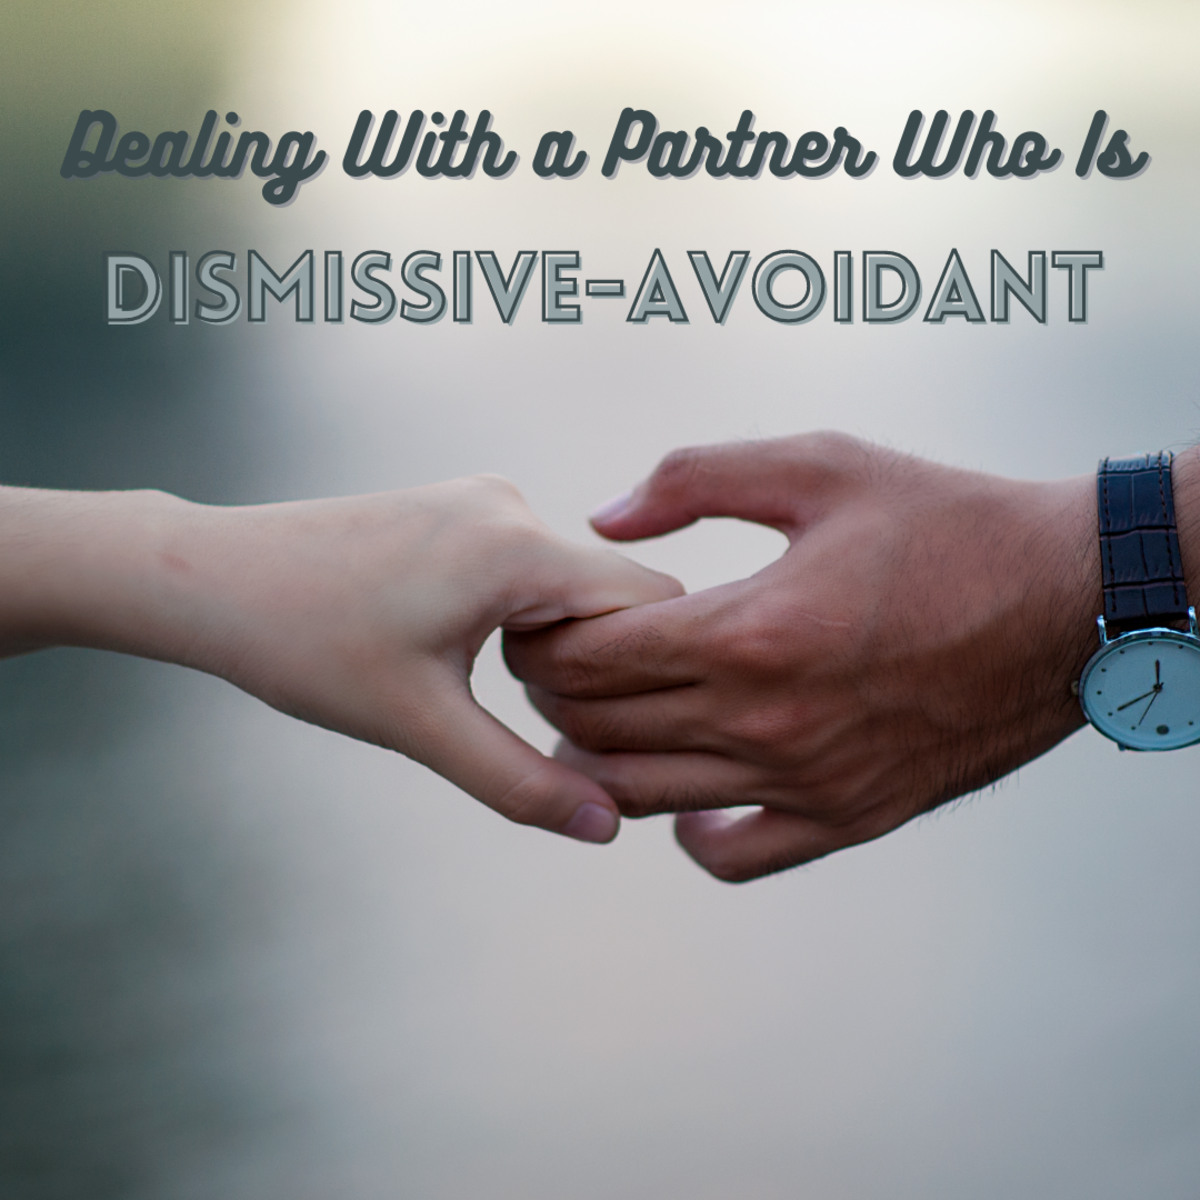 My husband is dismissive of my feelings—what should I do?